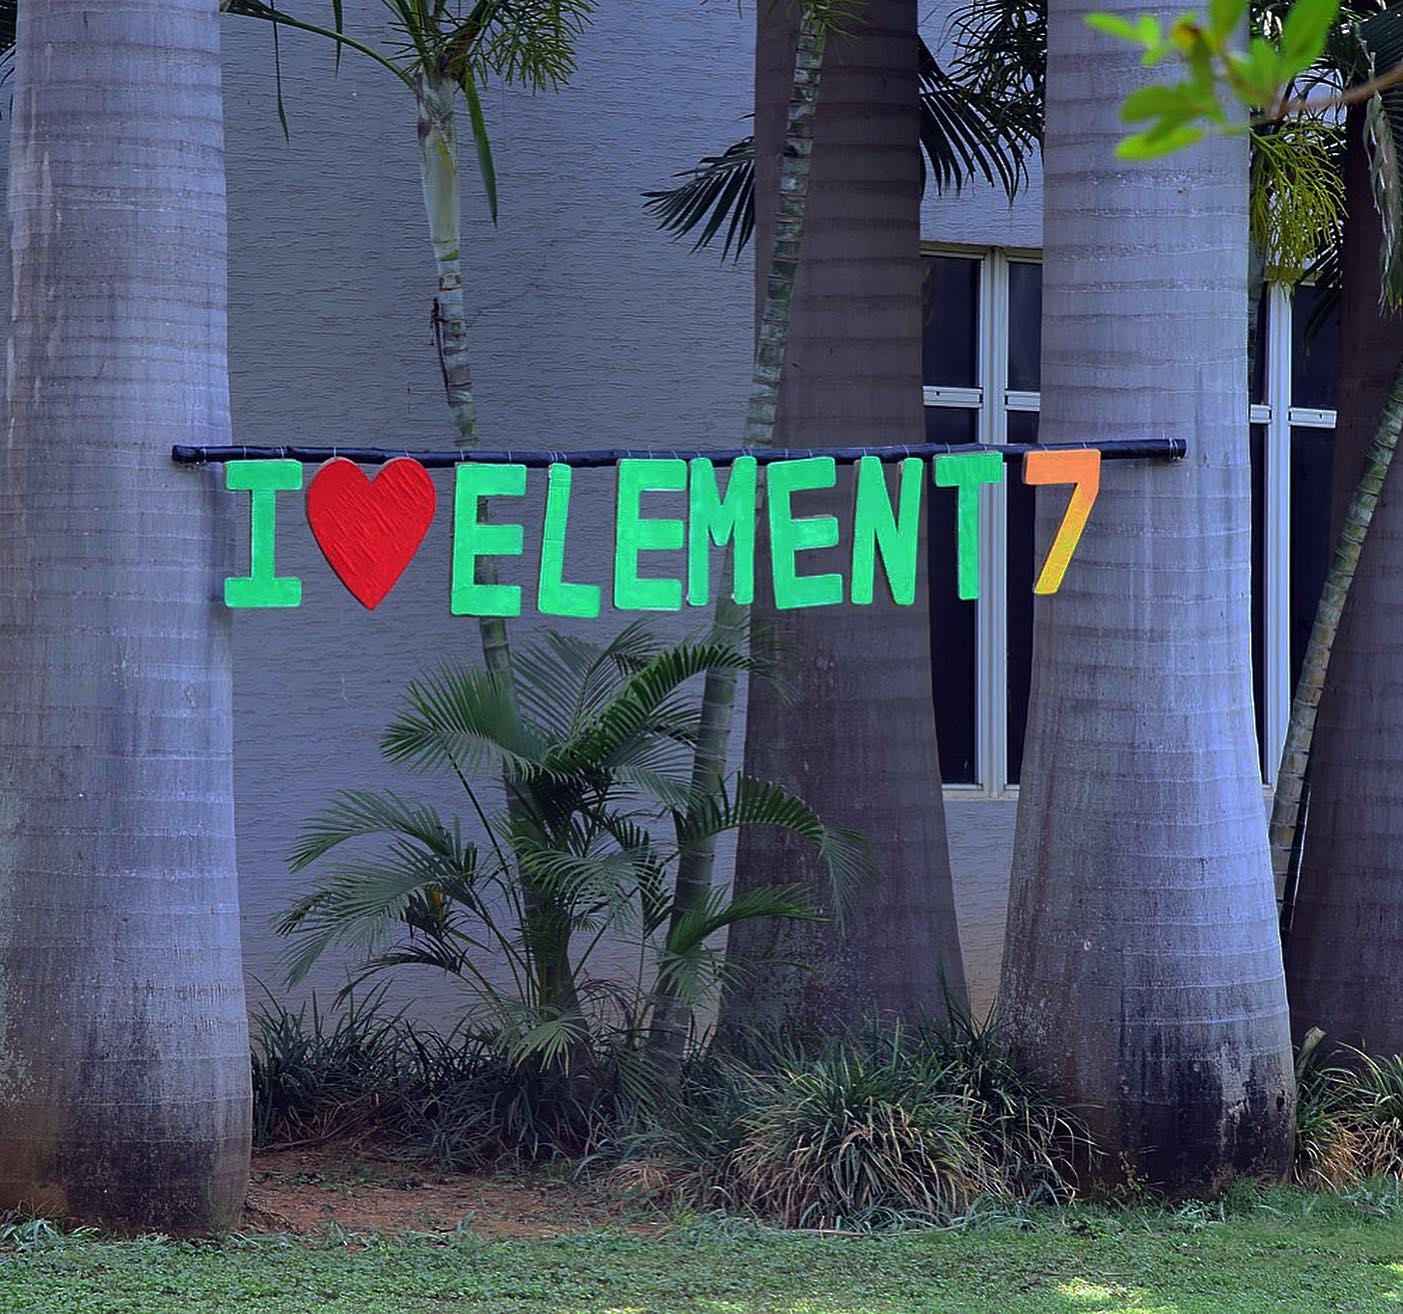 element 7